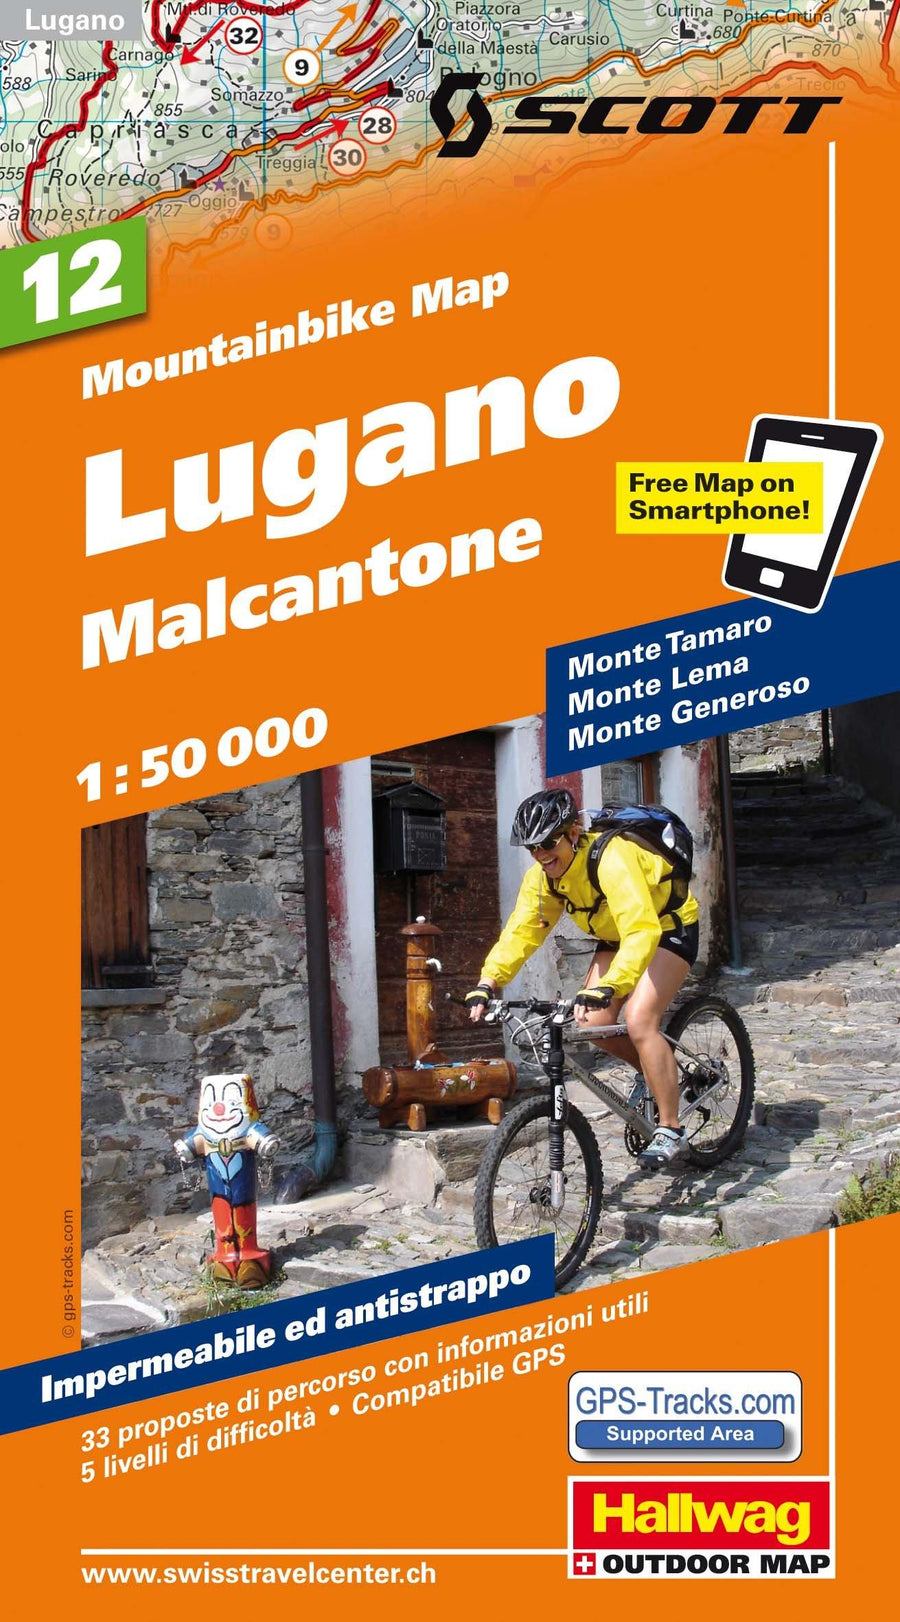 Carte spéciale VTT n° WKM.12 - Lugano, Malcantone (Suisse) | Hallwag carte pliée Hallwag 